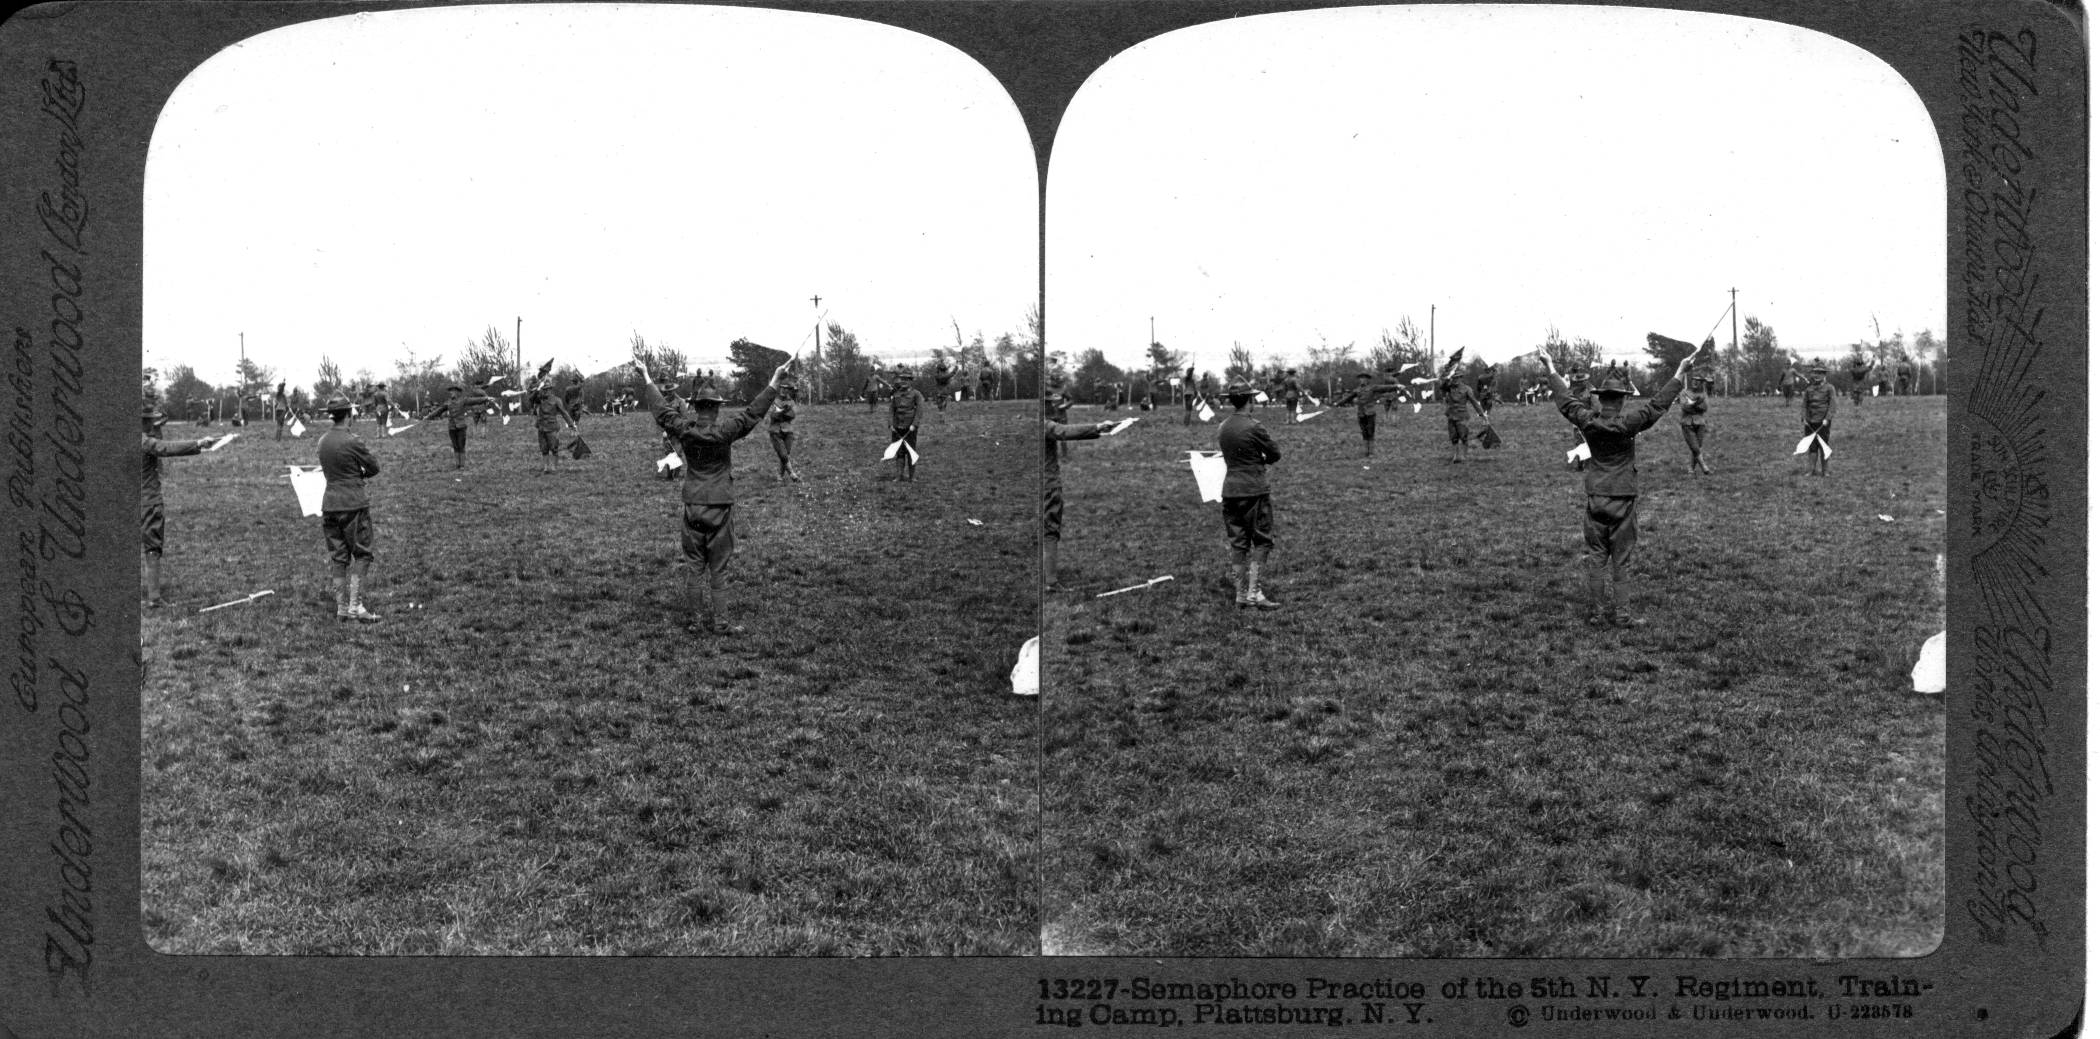 Semaphore Practice of the 5th N.Y. Regiment, Training Camp, Plattsburg, N.Y.